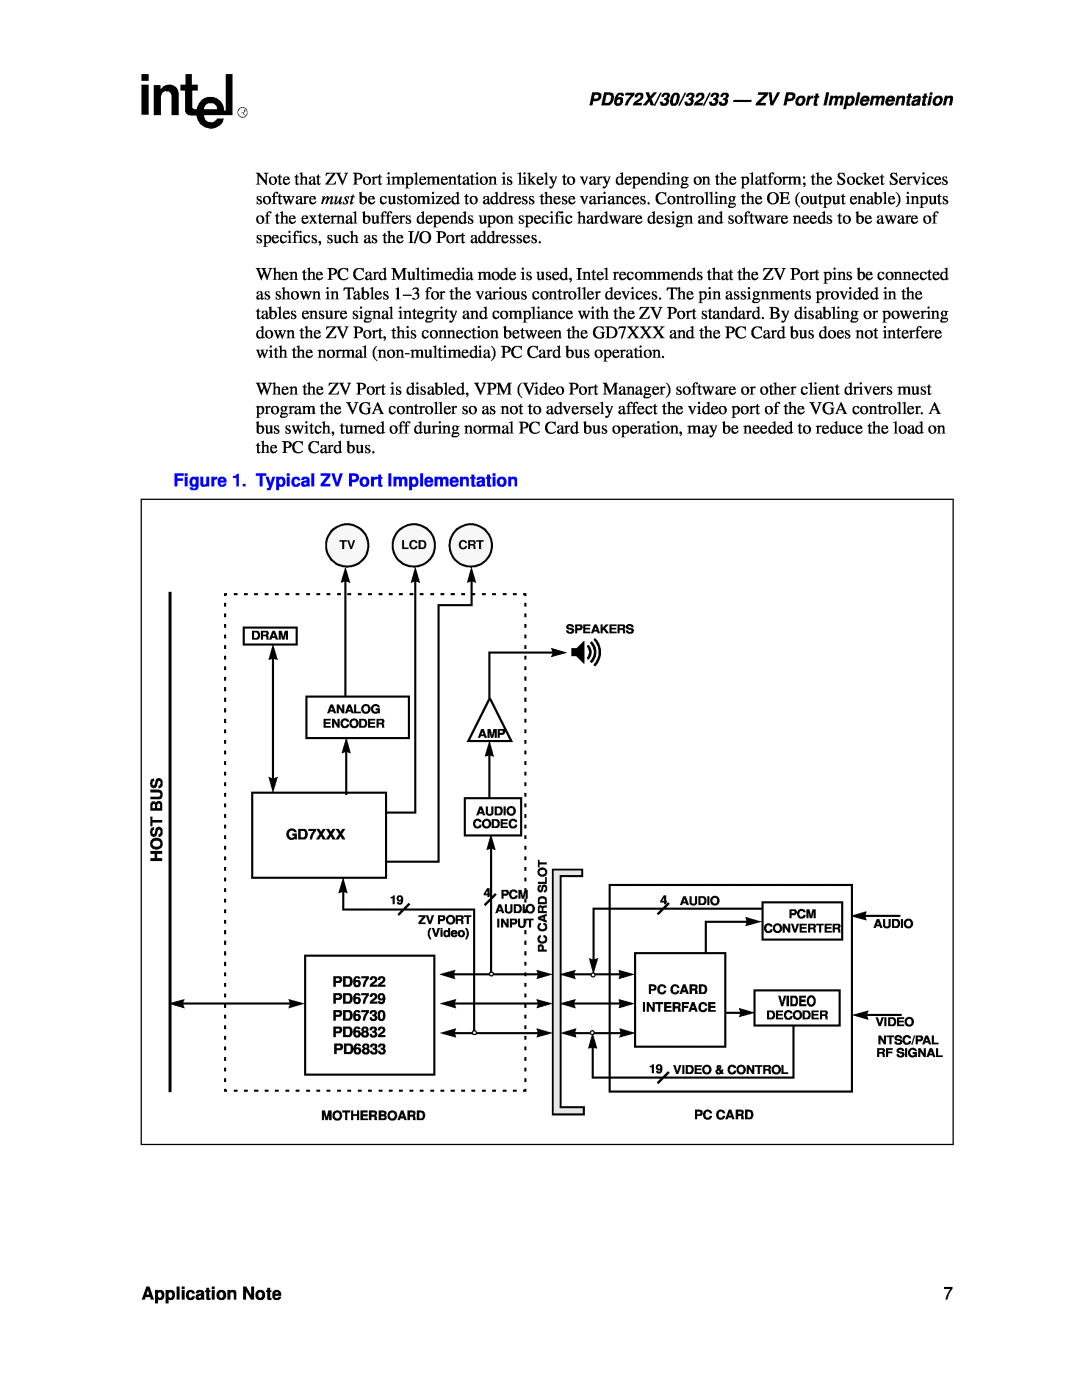 Intel manual PD672X/30/32/33 - ZV Port Implementation, Typical ZV Port Implementation, Application Note 